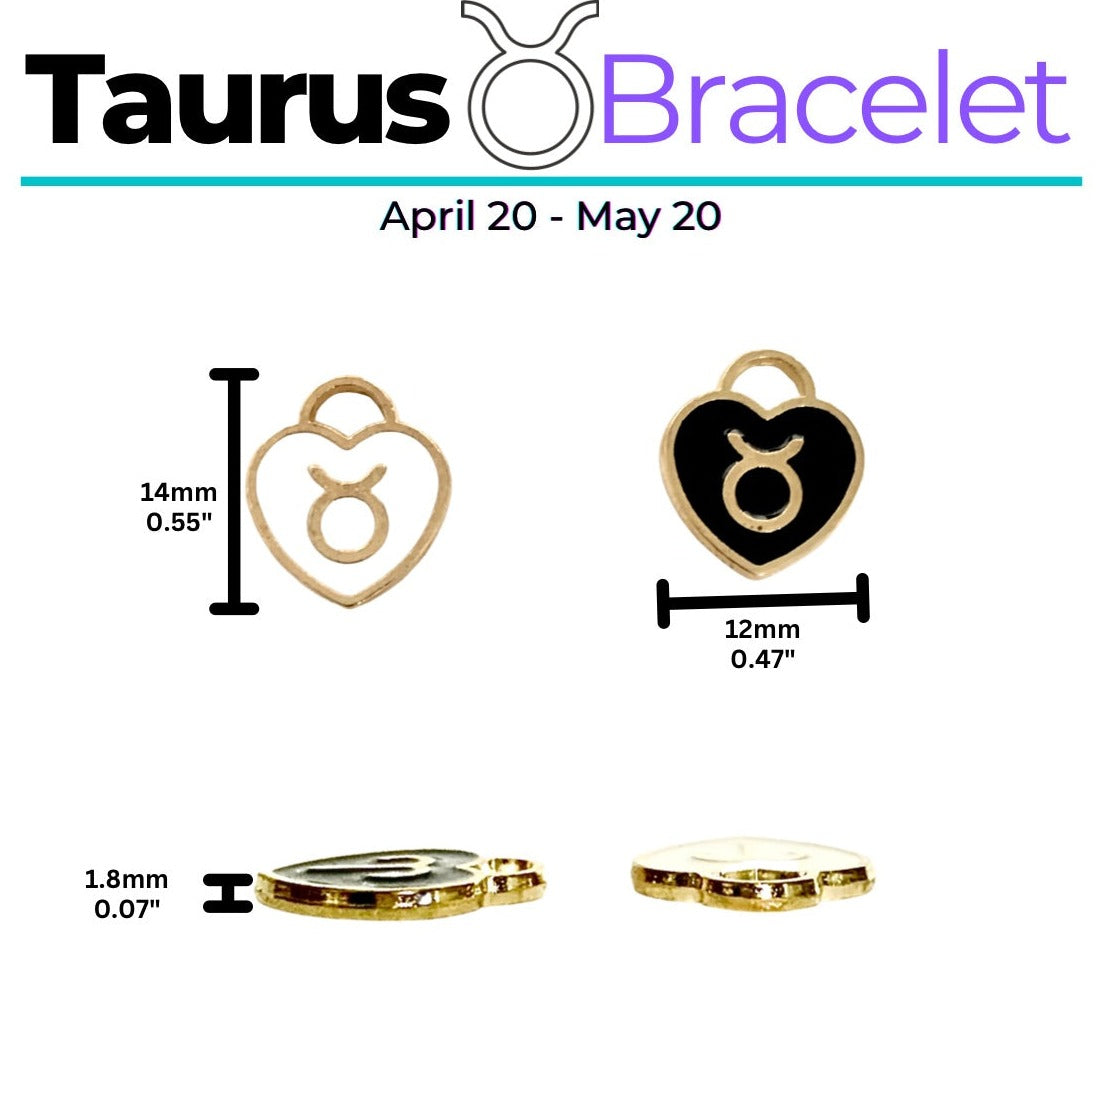 Focused shot on the Taurus Bracelet's unique design for added flair.